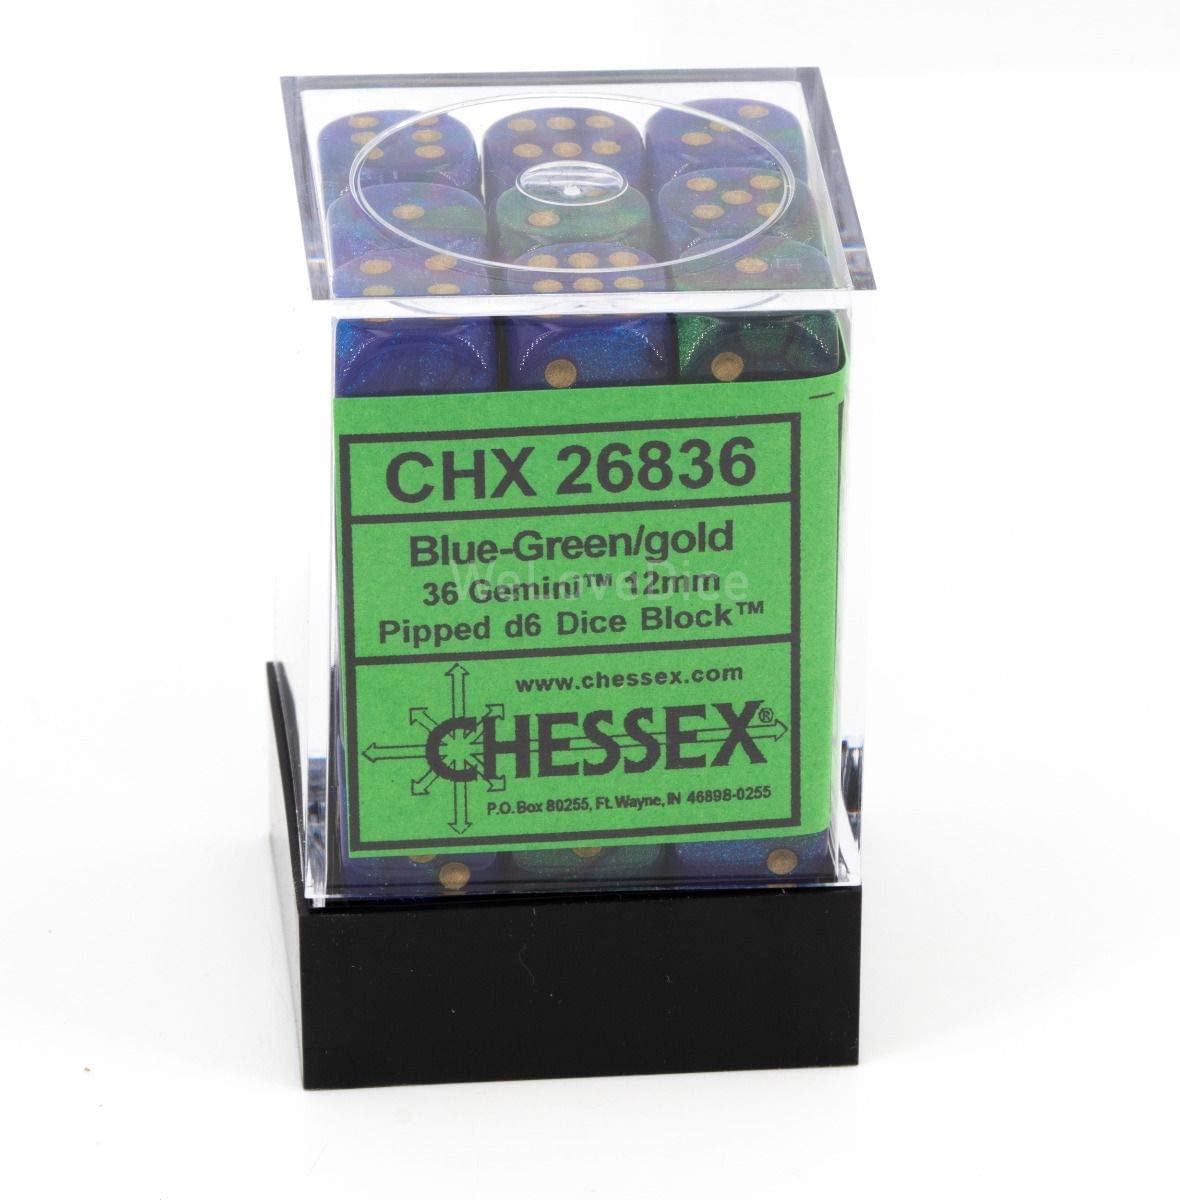 Chessex Dice: D6 Block 12mm - Gemini - Blue-Green with Gold (CHX 26836) - Gamescape